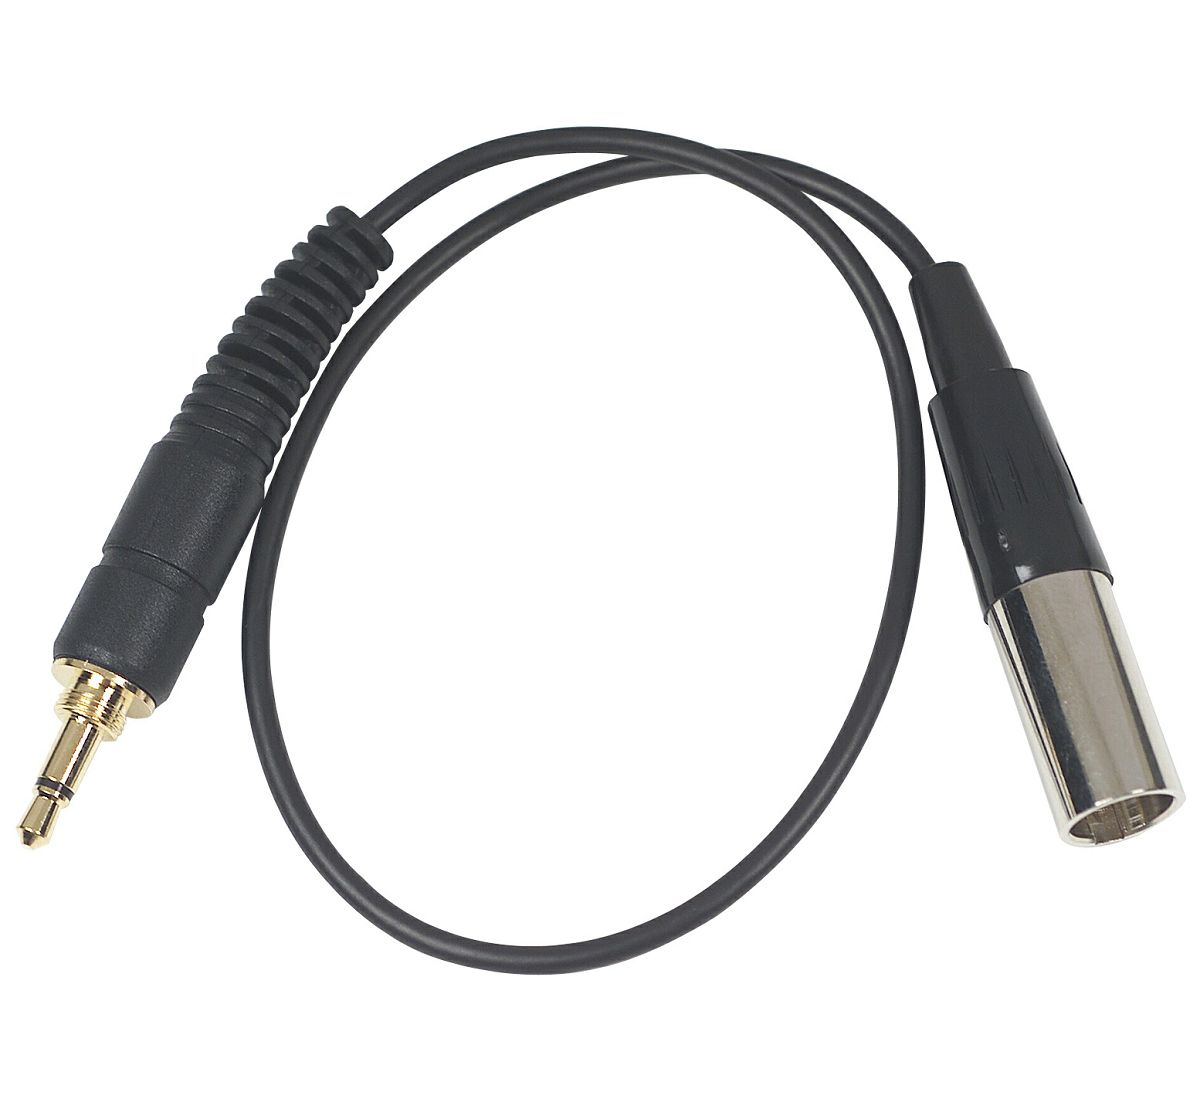 AKG Adapter cable AKG-B-LOCK/L